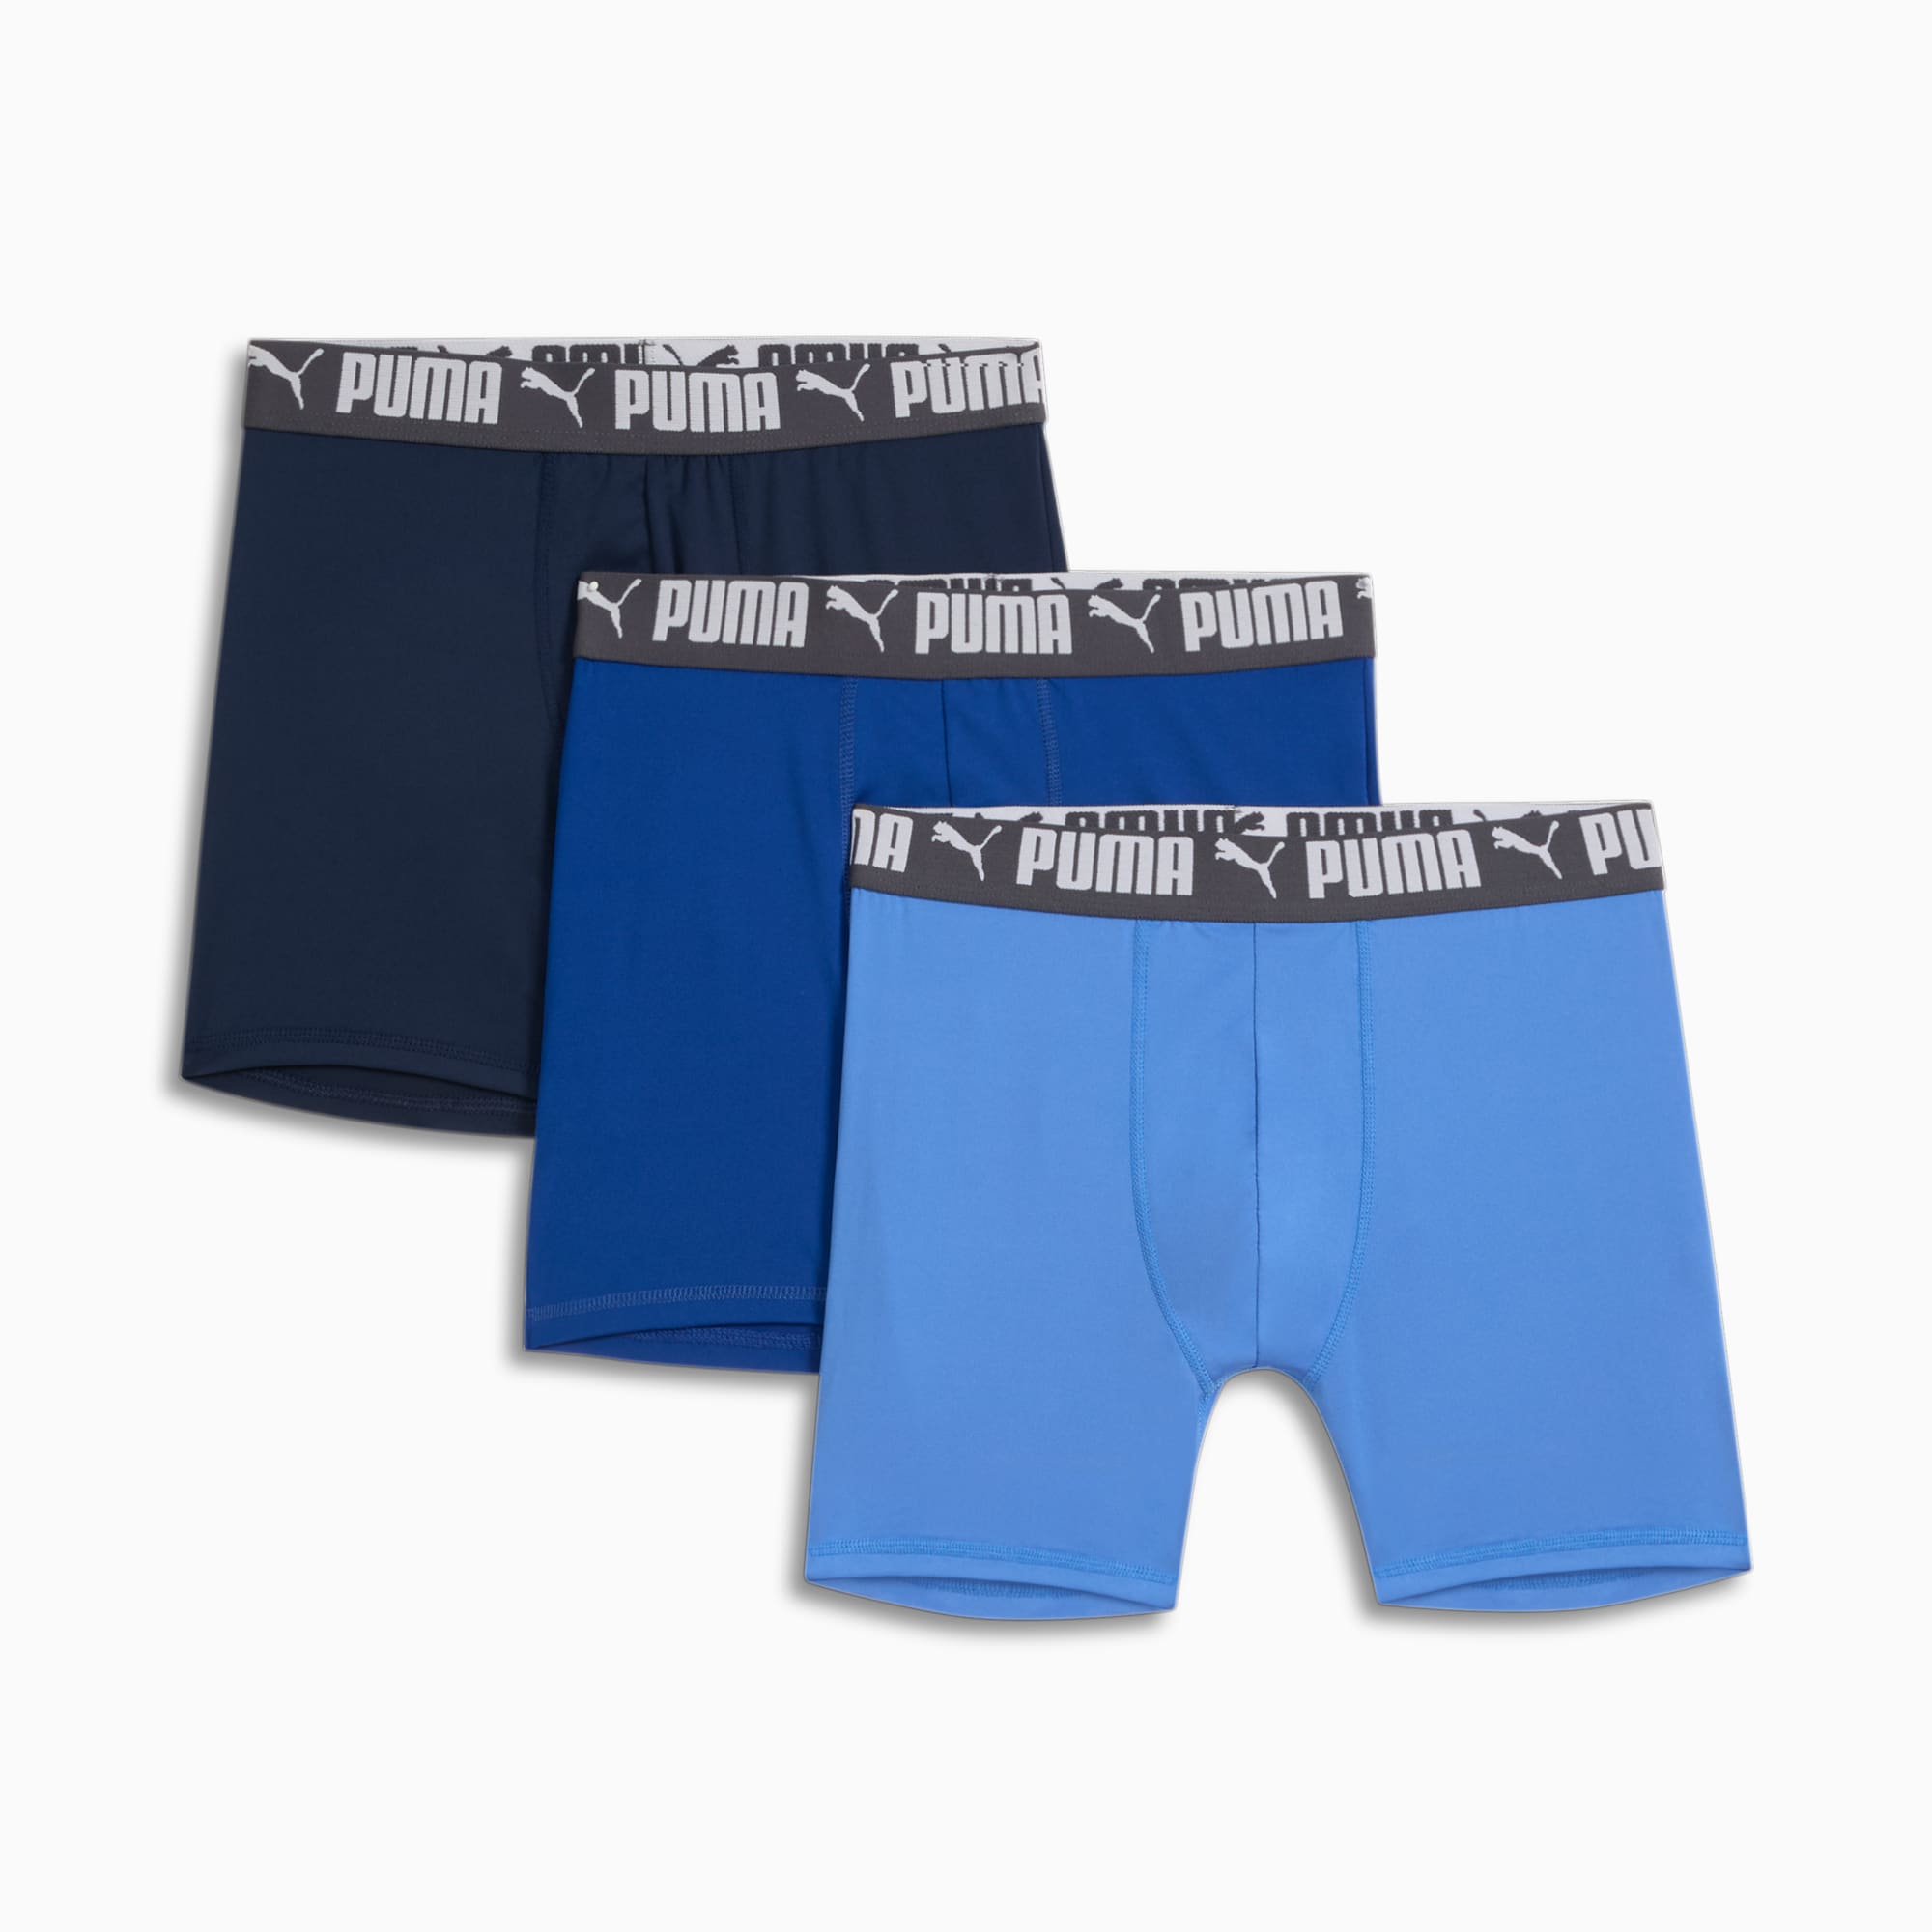  PUMA Men's 3pk Athletic Fit Boxer Brief : Clothing